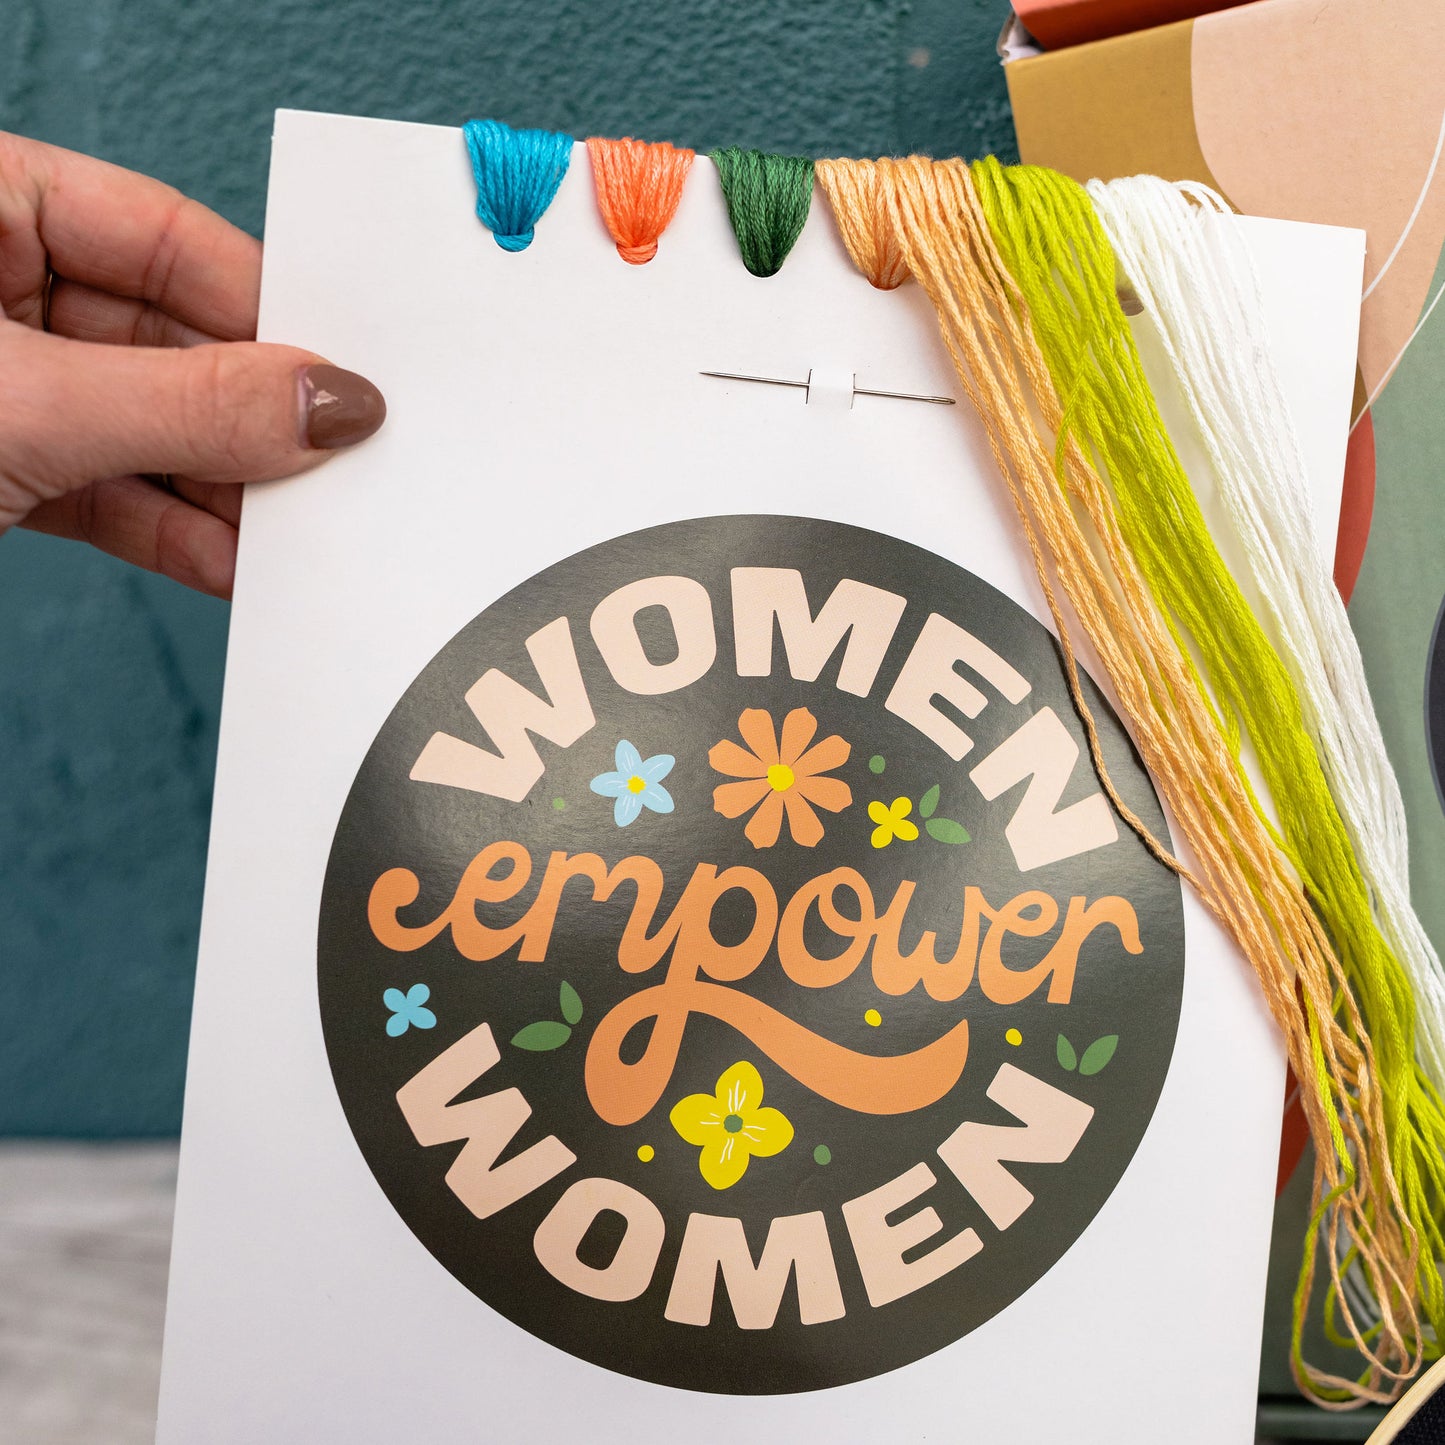 Women Empower Women Embroidery